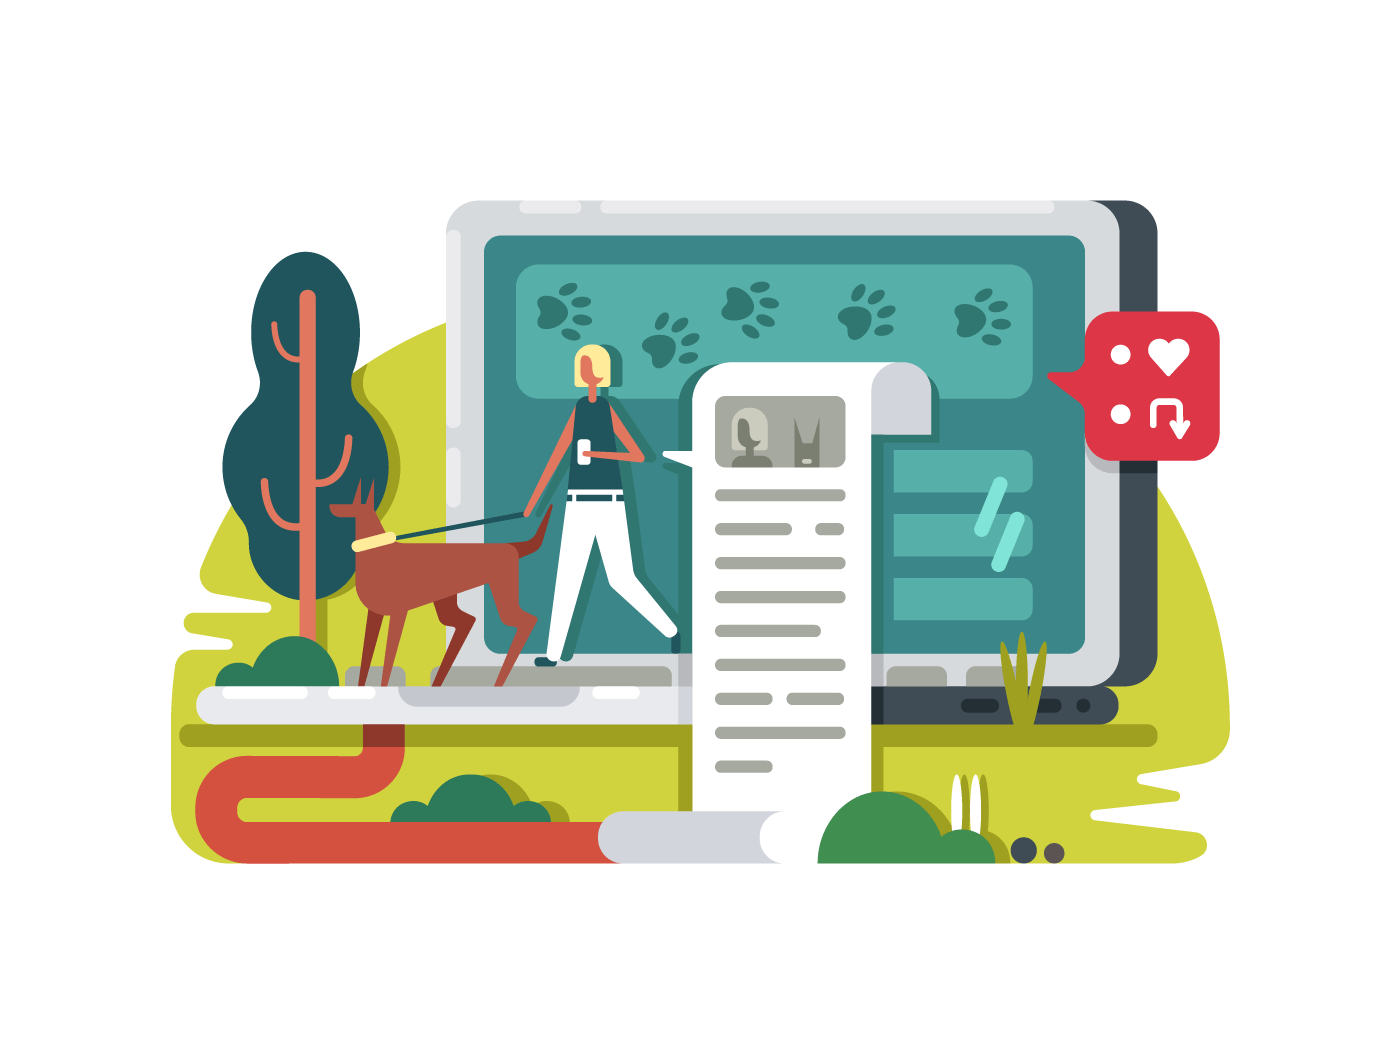 Blogging about life in internet illustration